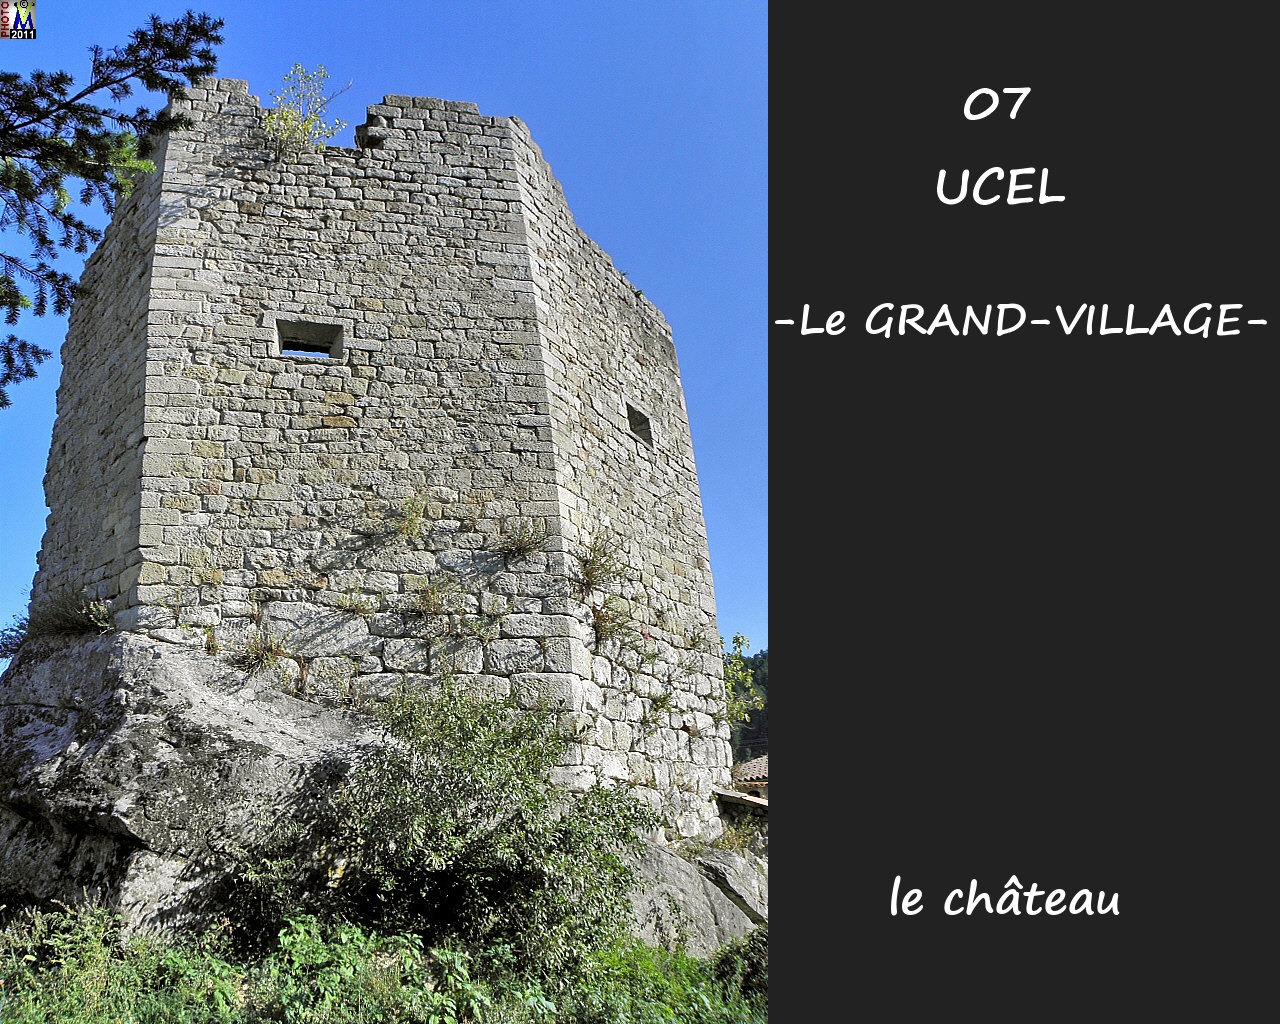 07UCELzGrandVillage_chateau_104.jpg